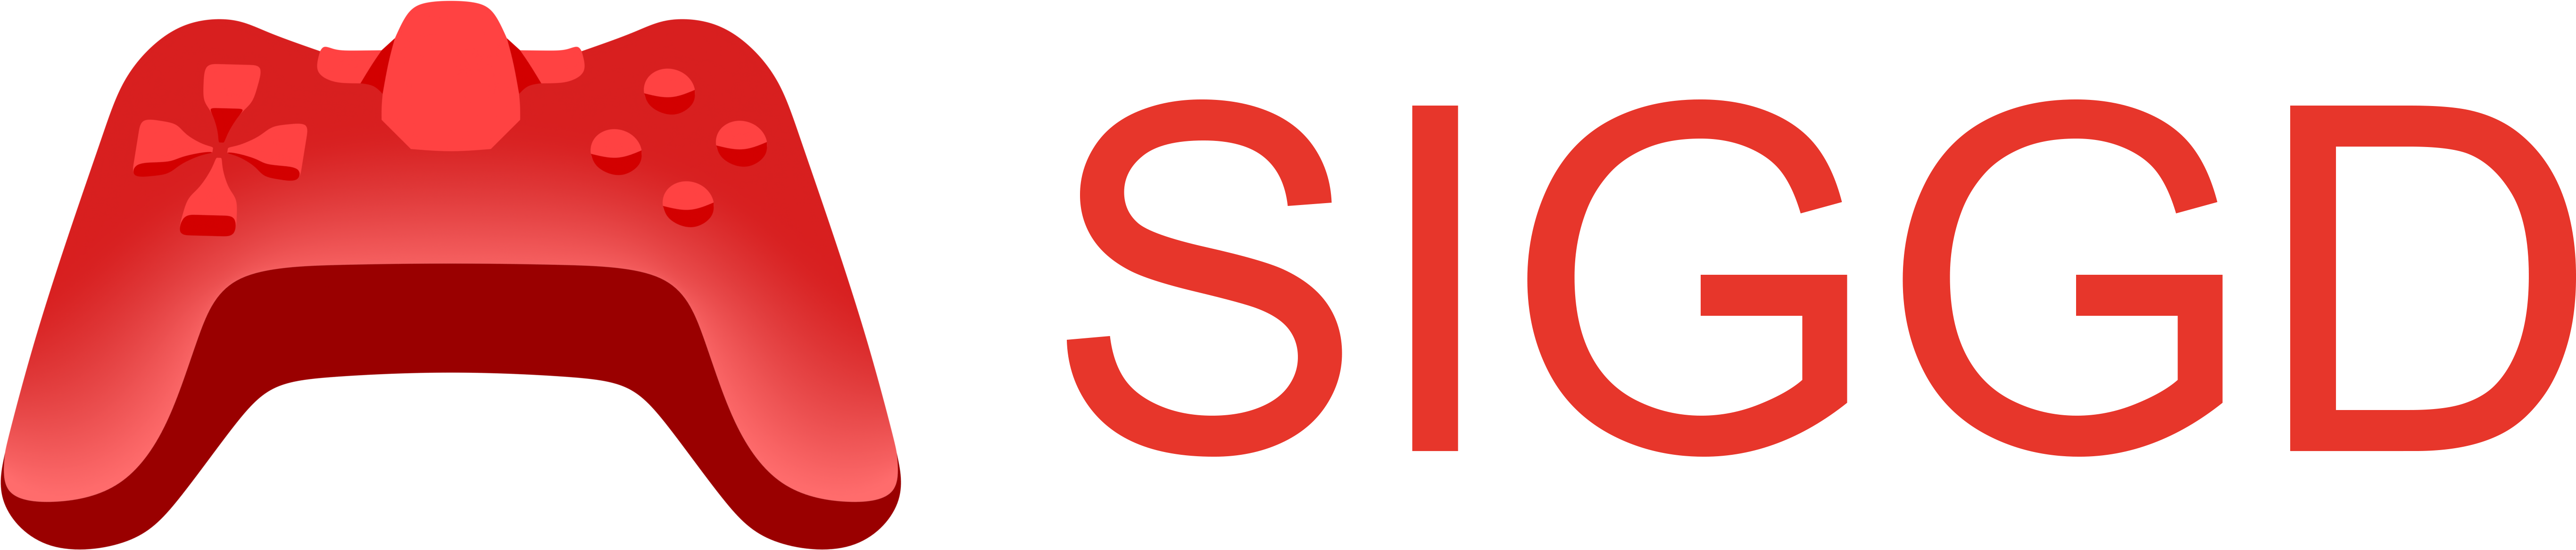 SIGGD's logo